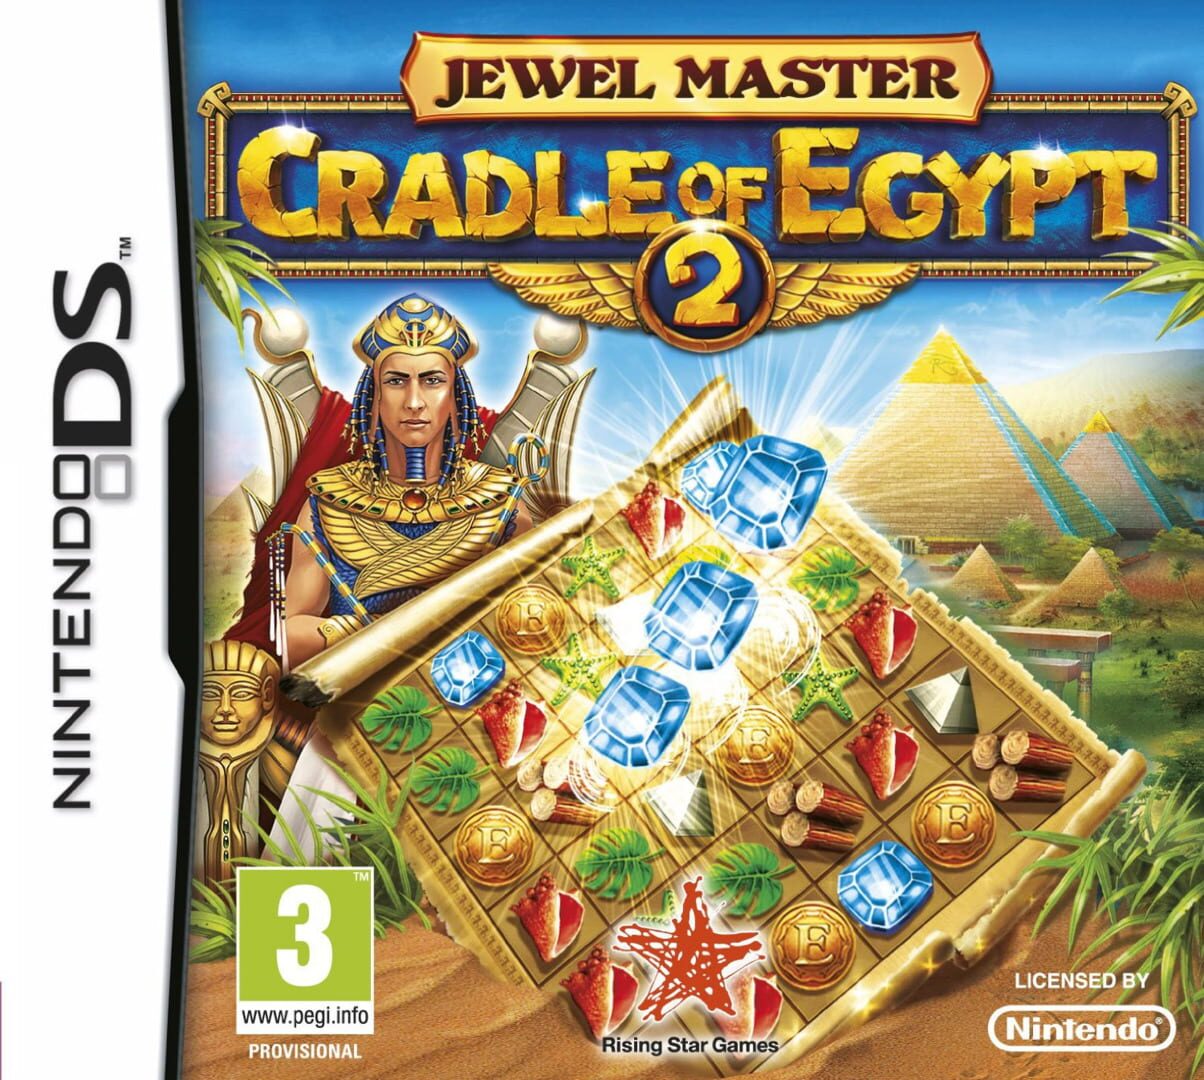 Jewel Master Cradle of Egypt. NDS игры. Civilization Nintendo DS. Египет 2 игра.